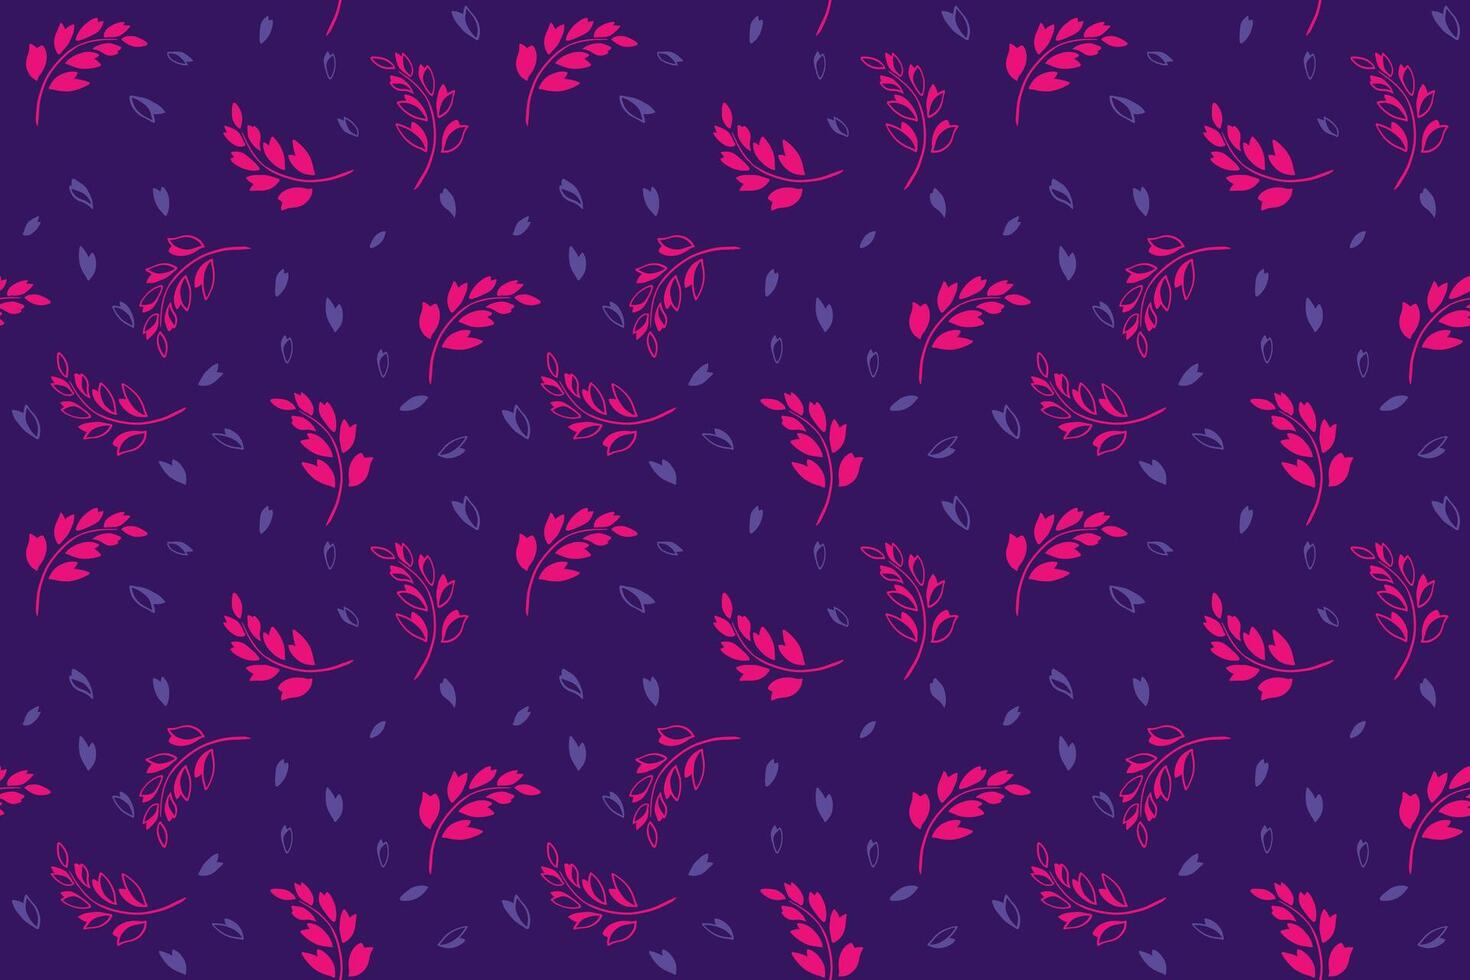 brillante púrpura sencillo sin costura modelo con resumen creativo minúsculo ramas hojas, formas, gotas. lindo, minimalista vector mano dibujado impresión. modelo para diseño, textil, impresión, moda, tela